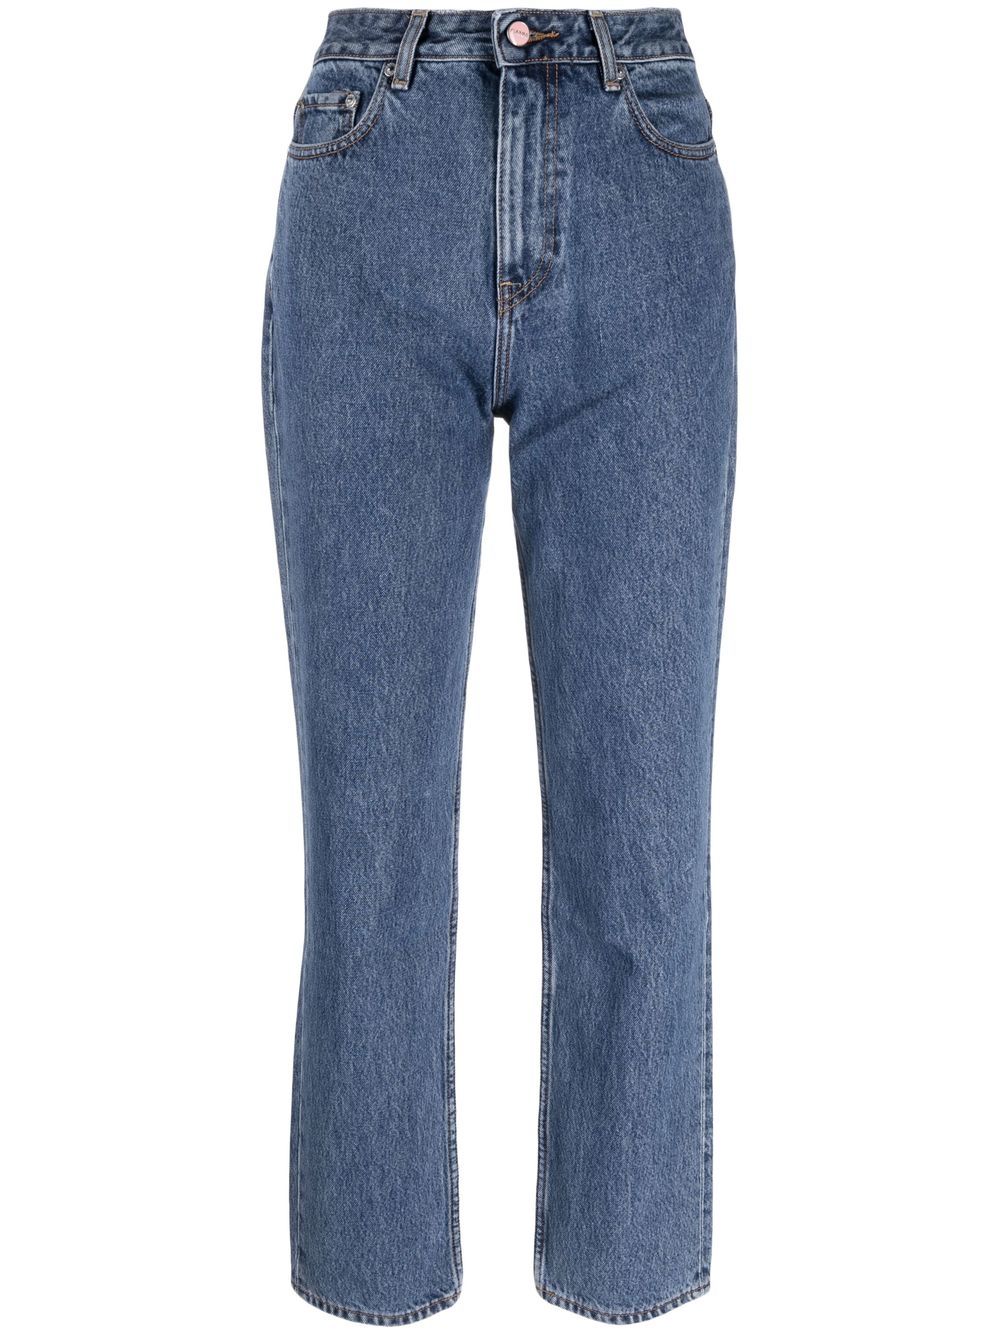 Swigy straight-leg jeans